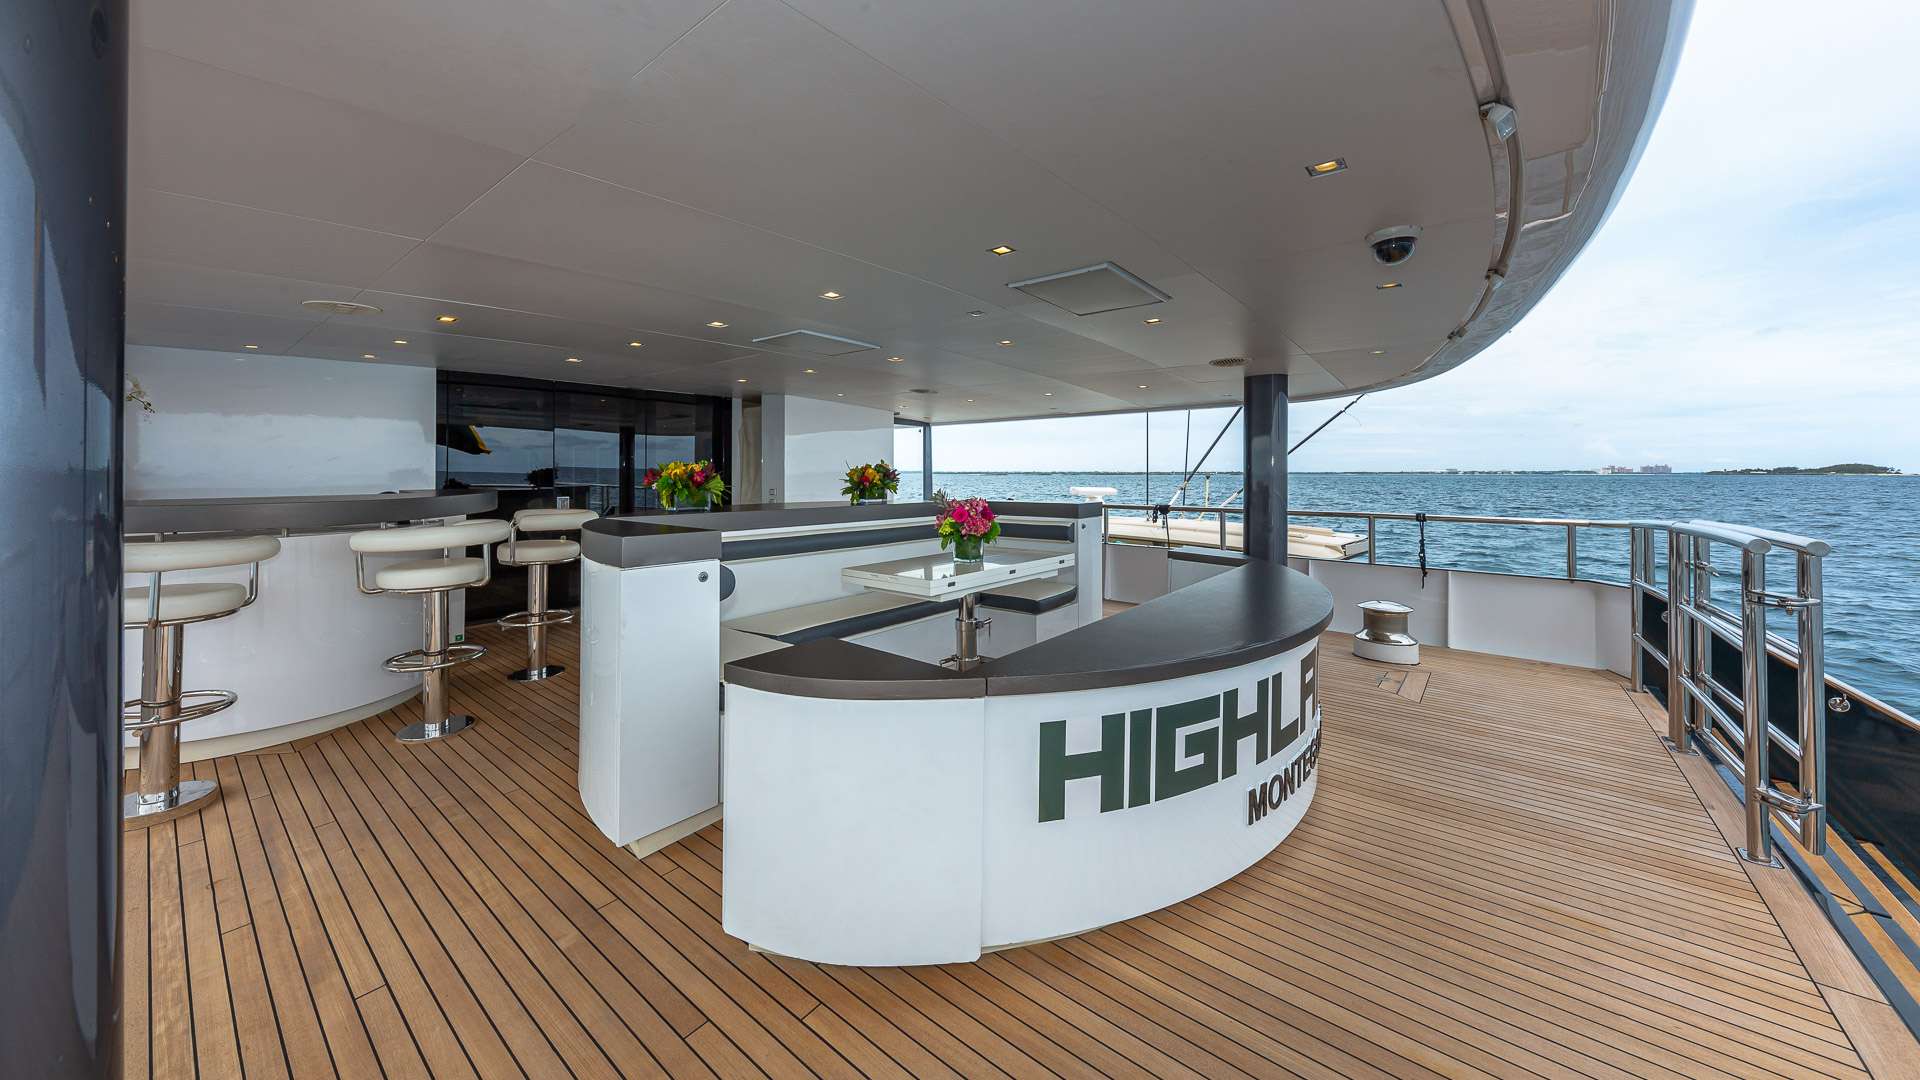 HIGHLANDER - Superyacht charter Grenada & Boat hire in Caribbean, Bahamas, Florida East Coast, Cuba, Dominican Republic, Turks and Caicos, USA South East 5